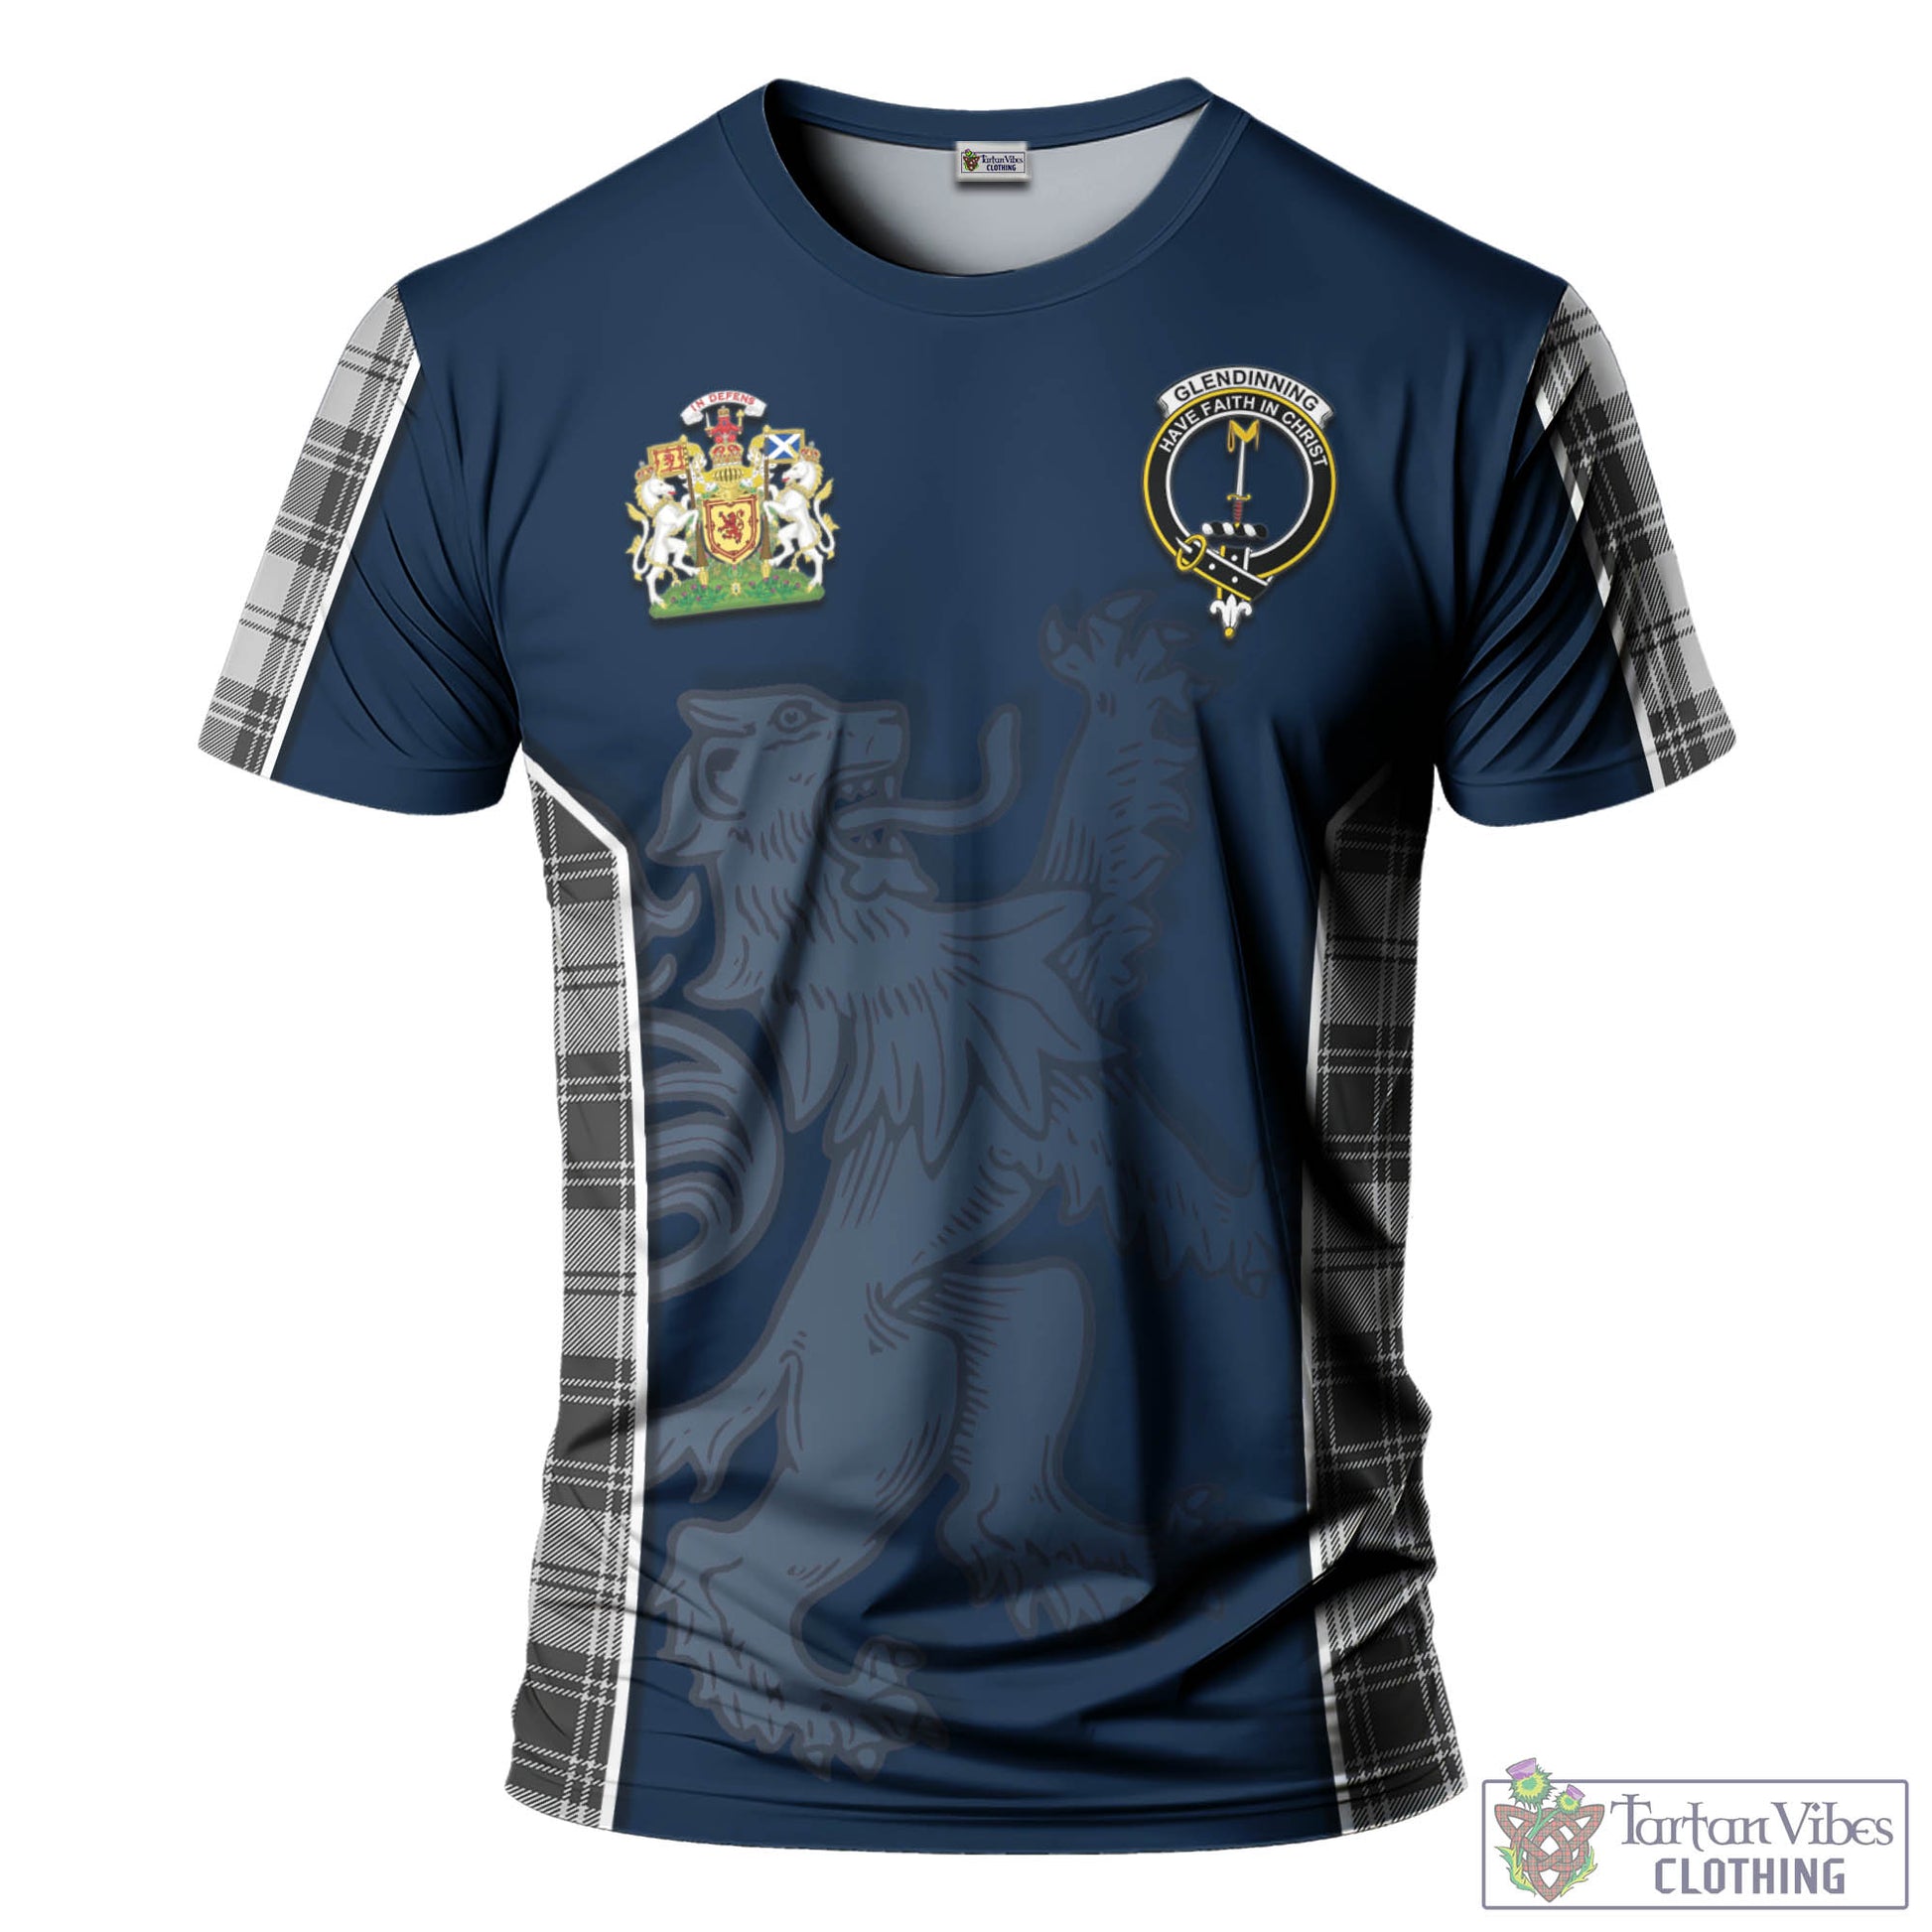 Tartan Vibes Clothing Glendinning Tartan T-Shirt with Family Crest and Lion Rampant Vibes Sport Style